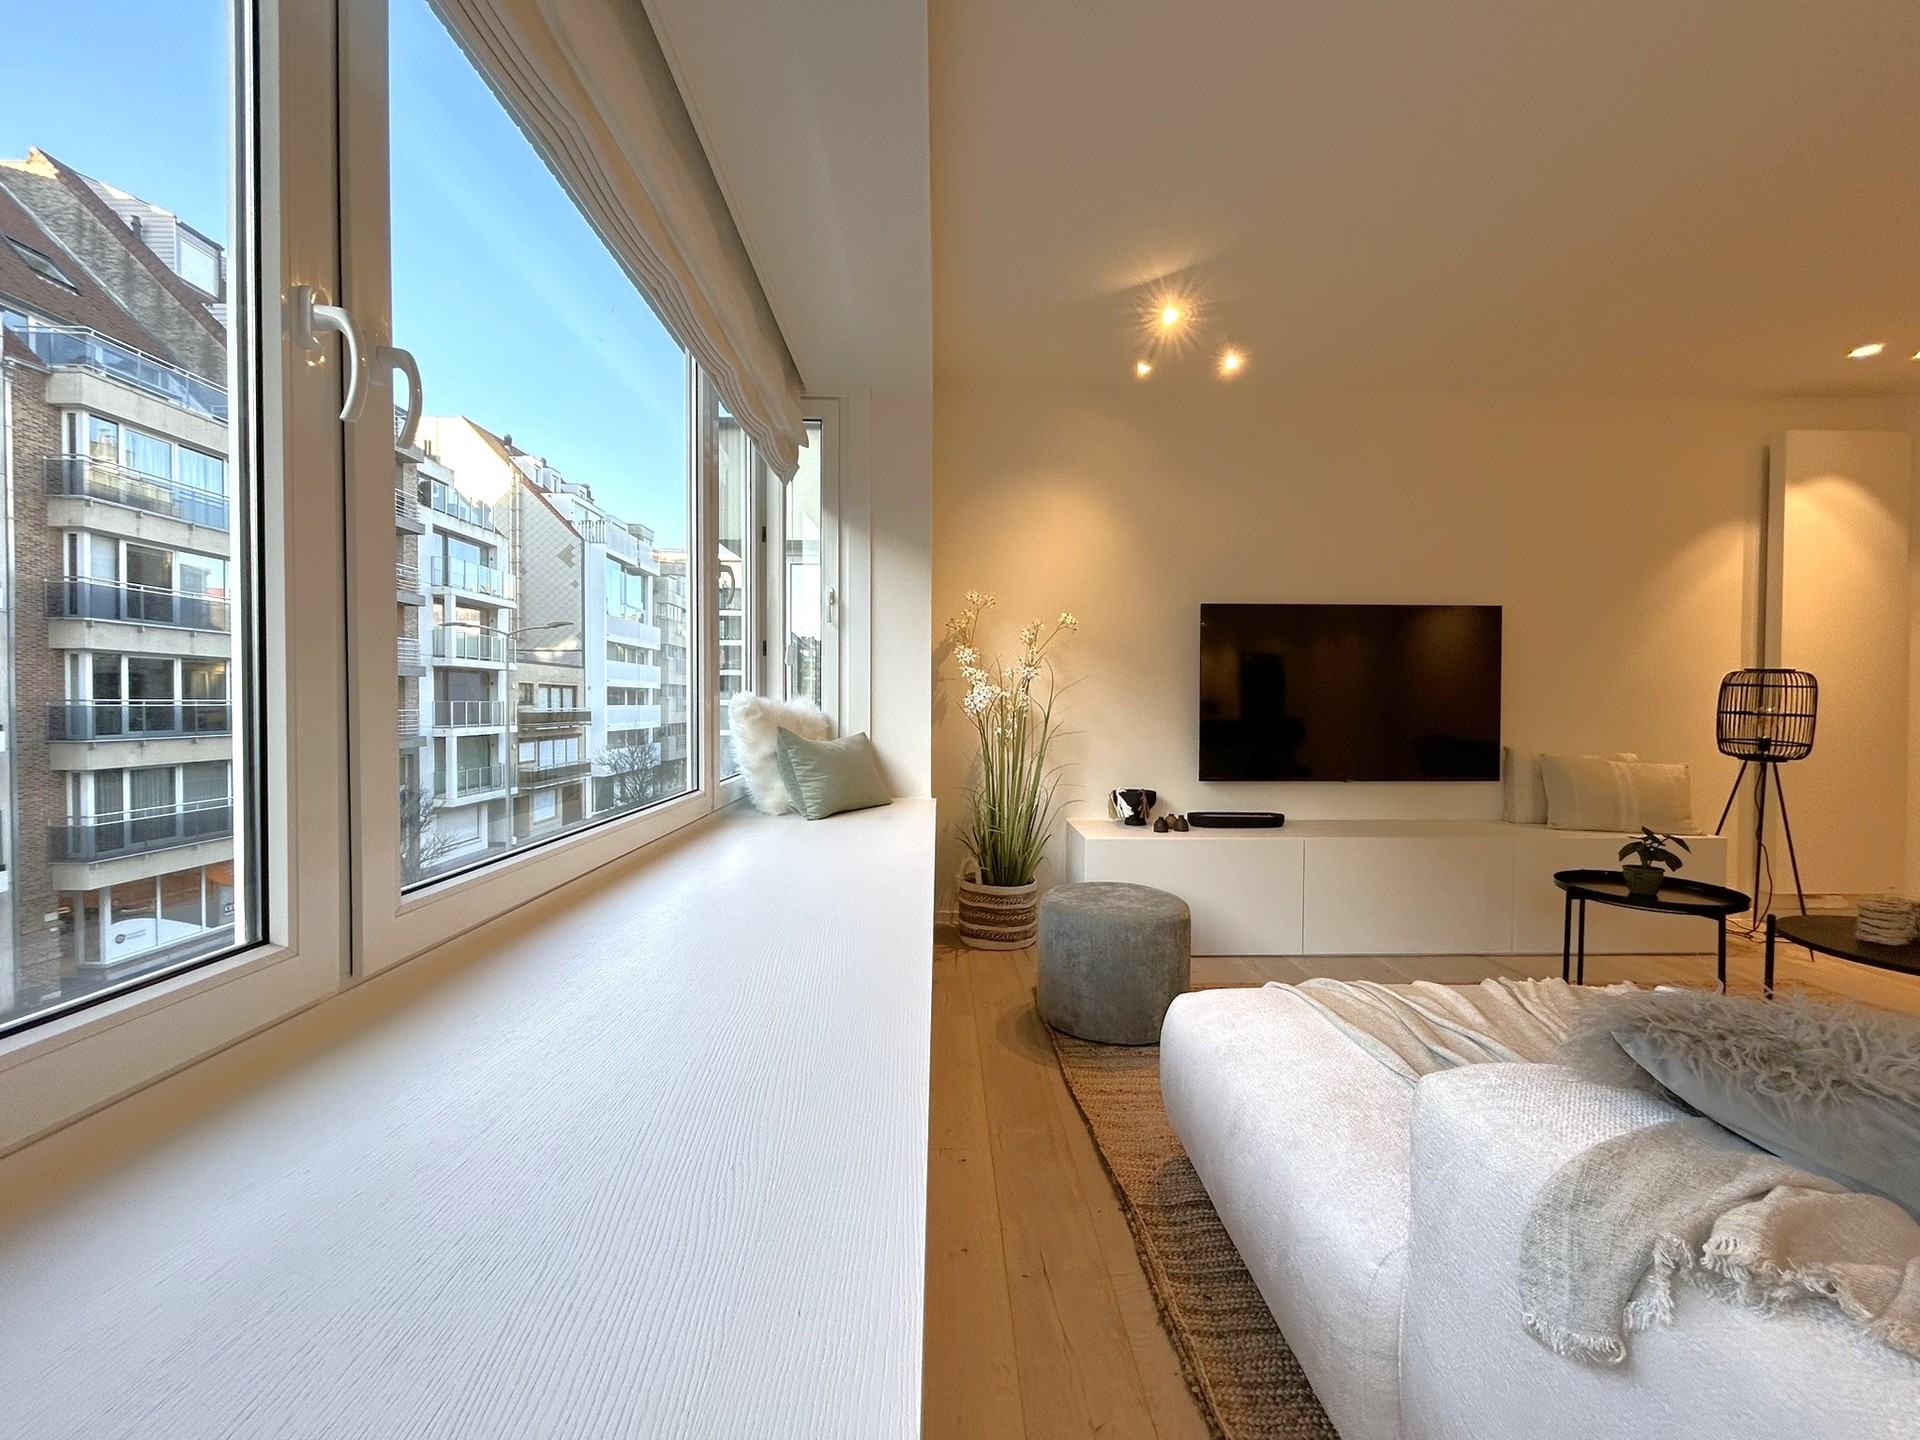 Gerenoveerd appartement met drie slaapkamers te Knokke - centrum foto 1